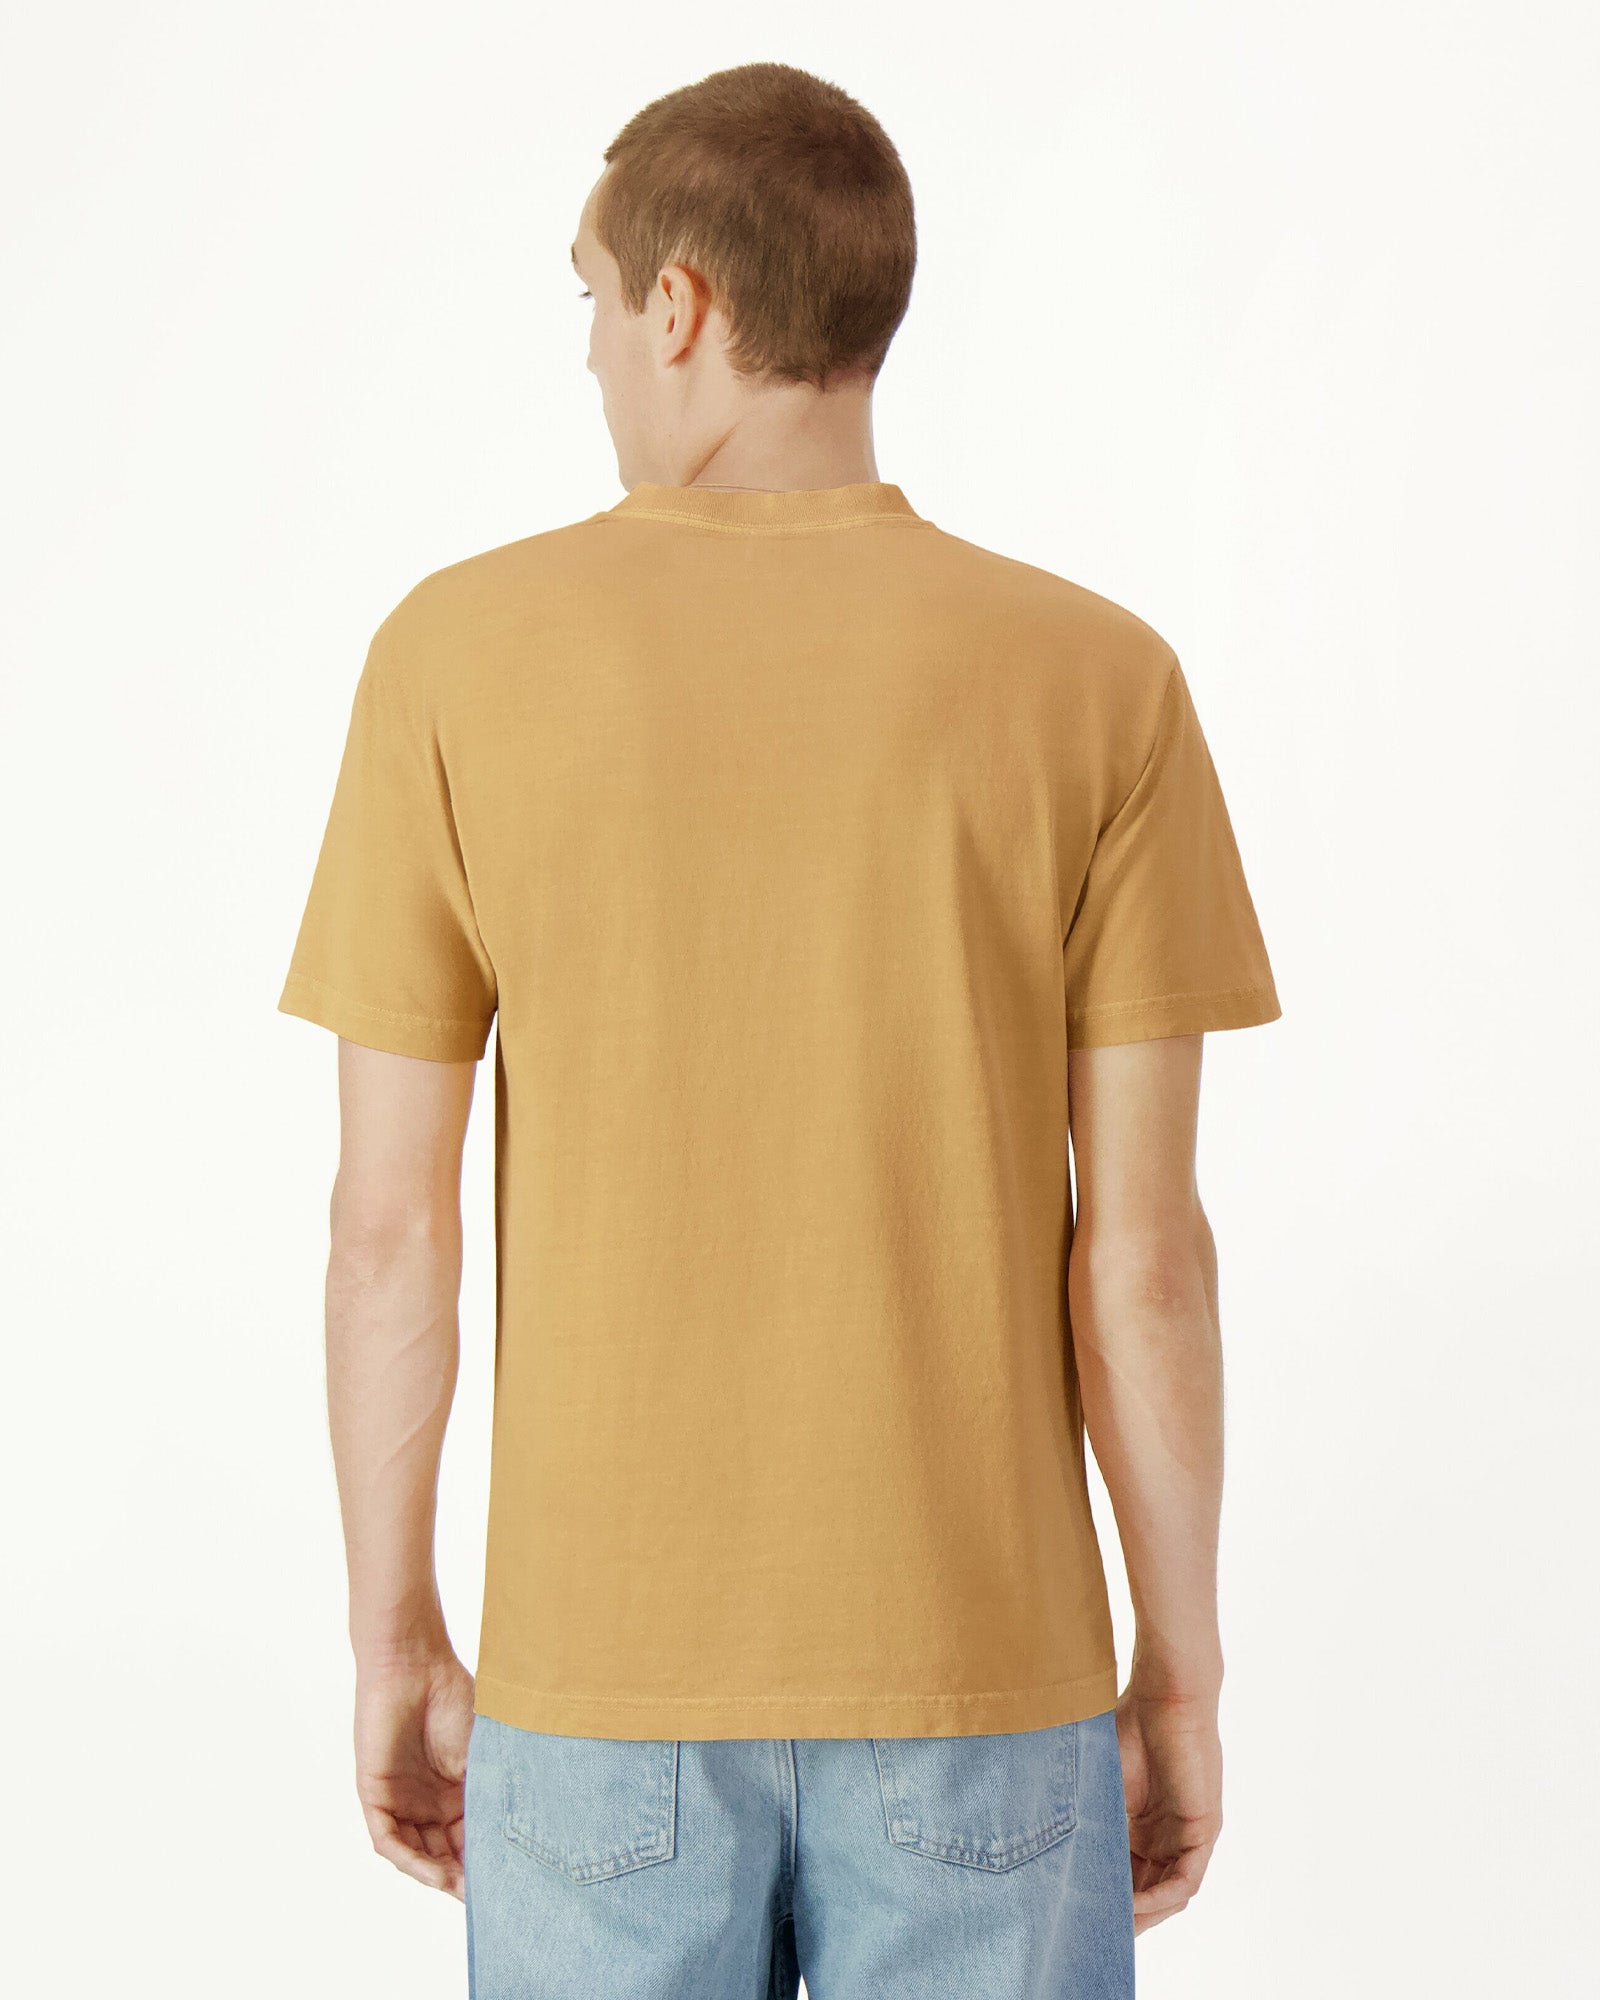 Garment Dyed Heavyweight Unisex T-Shirt - Faded Mustard